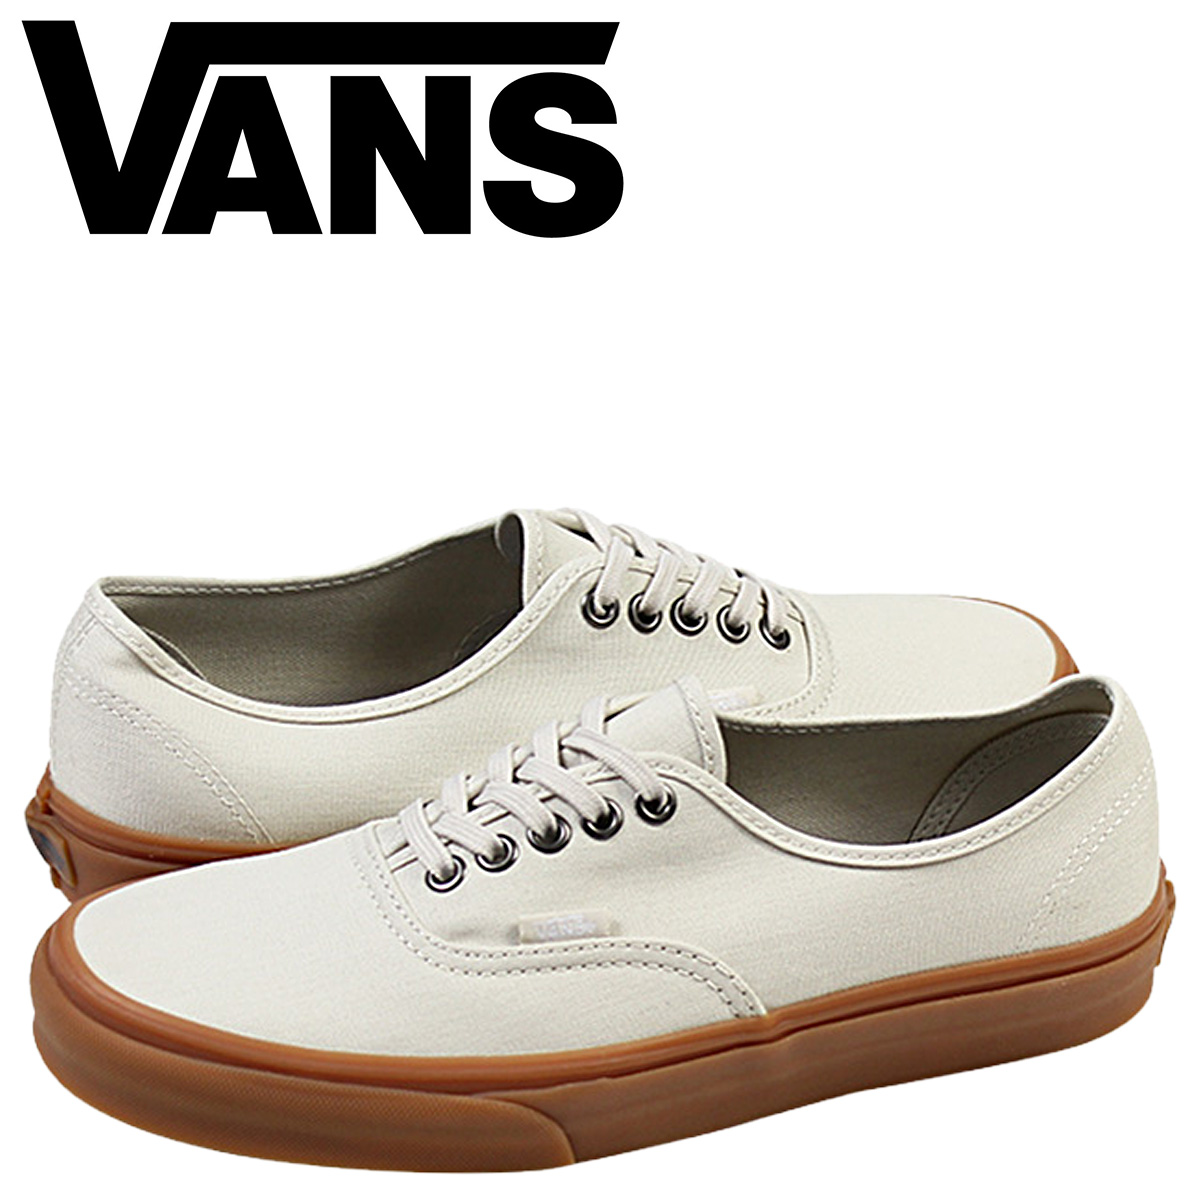 white leather vans gum sole